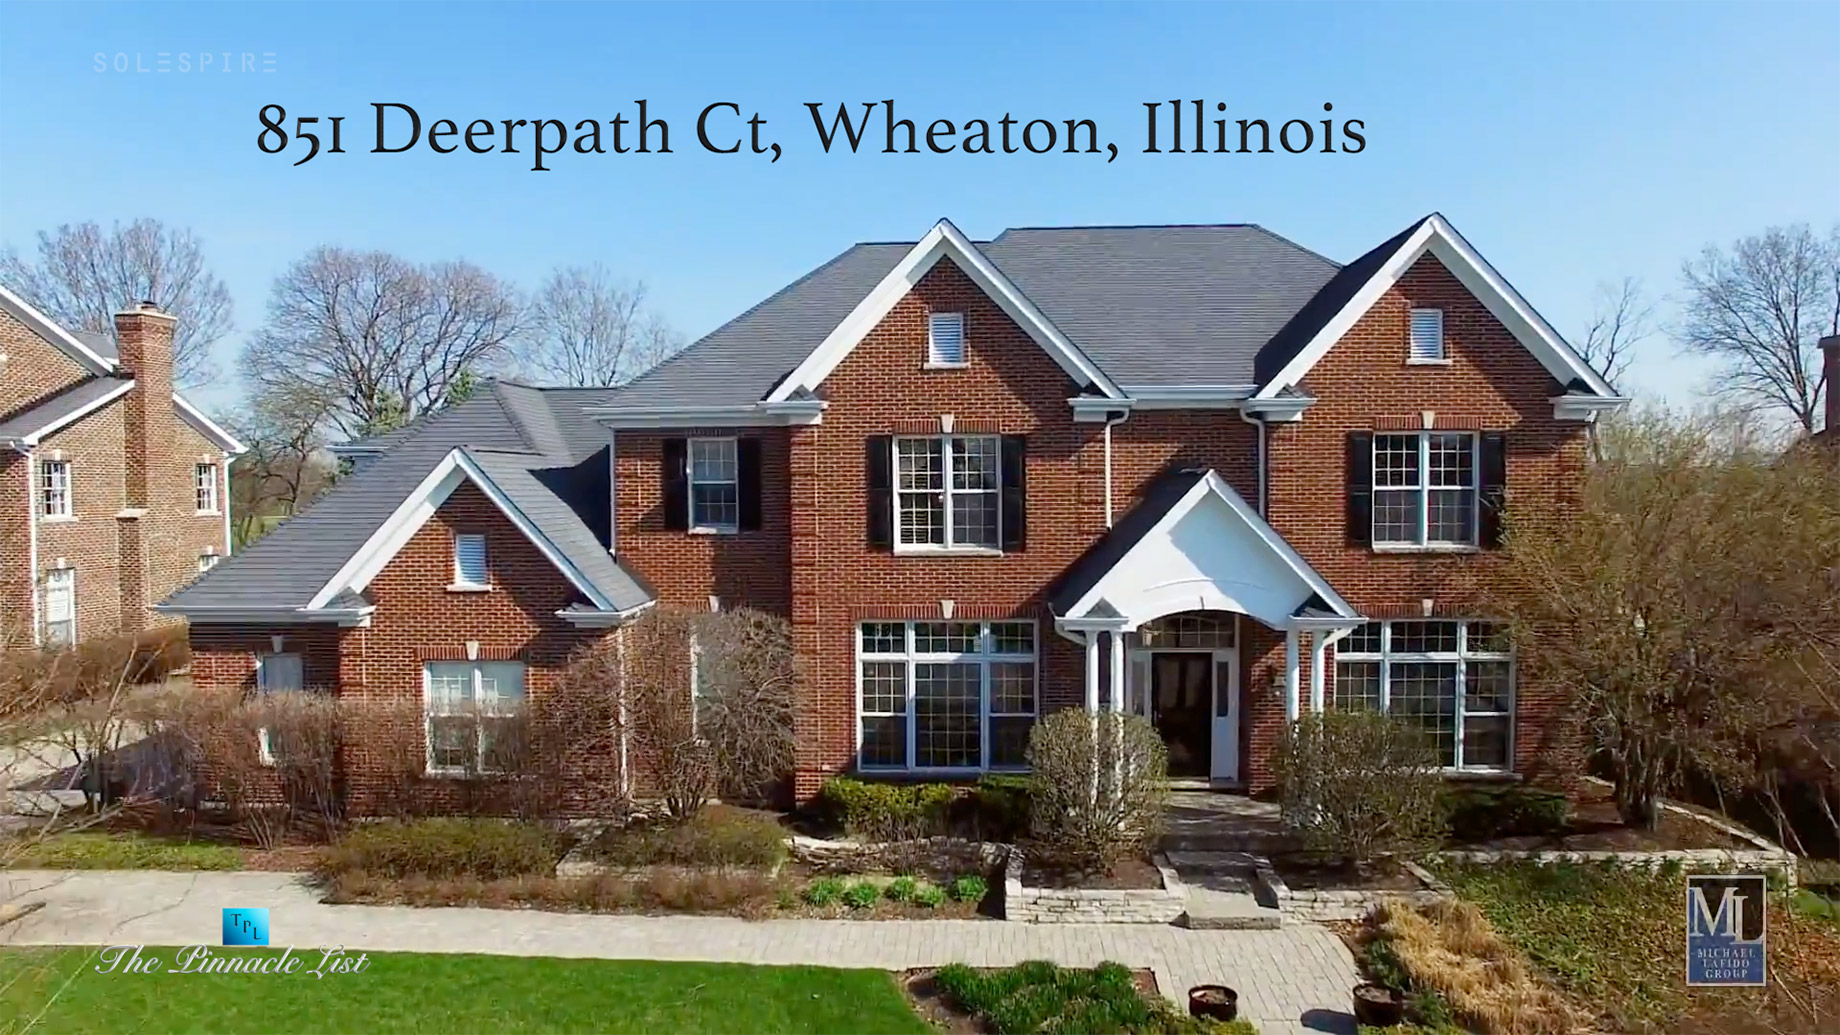 851 Deerpath Ct, Wheaton, IL, USA - Luxury Real Estate